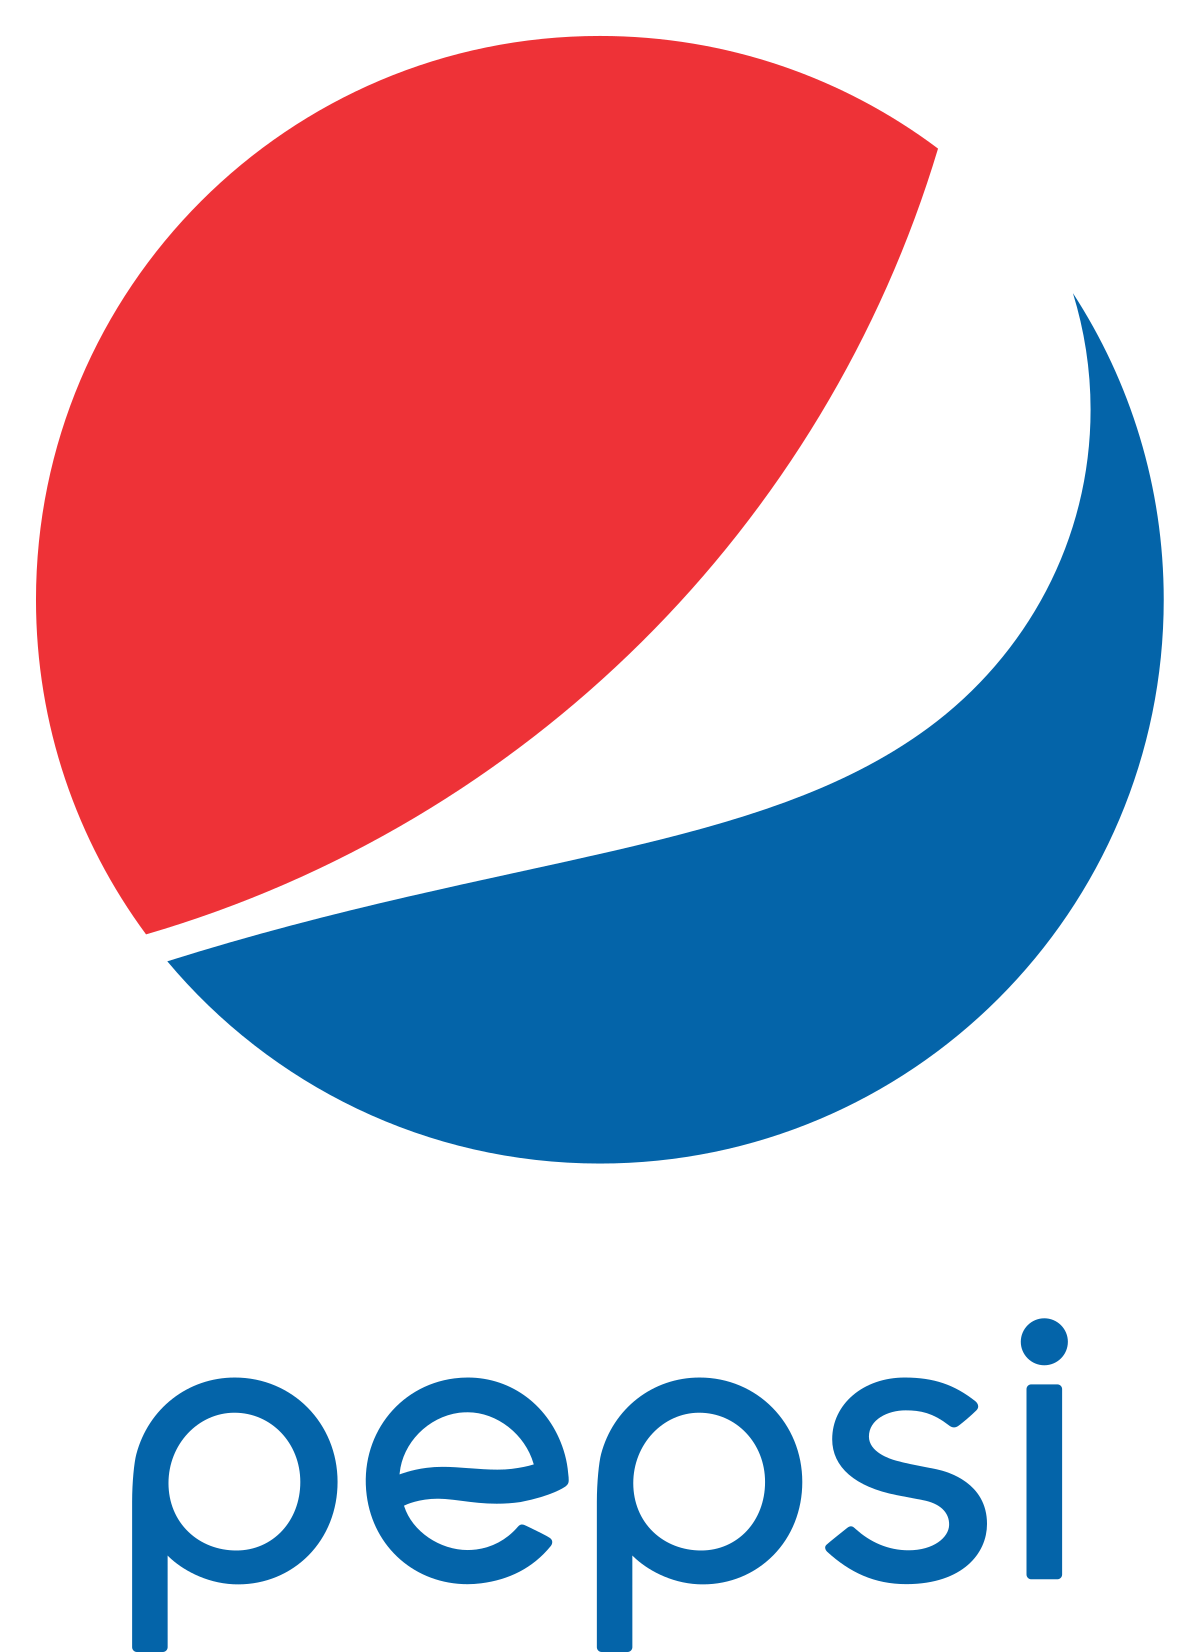 Pepsi_logo_2014.svg